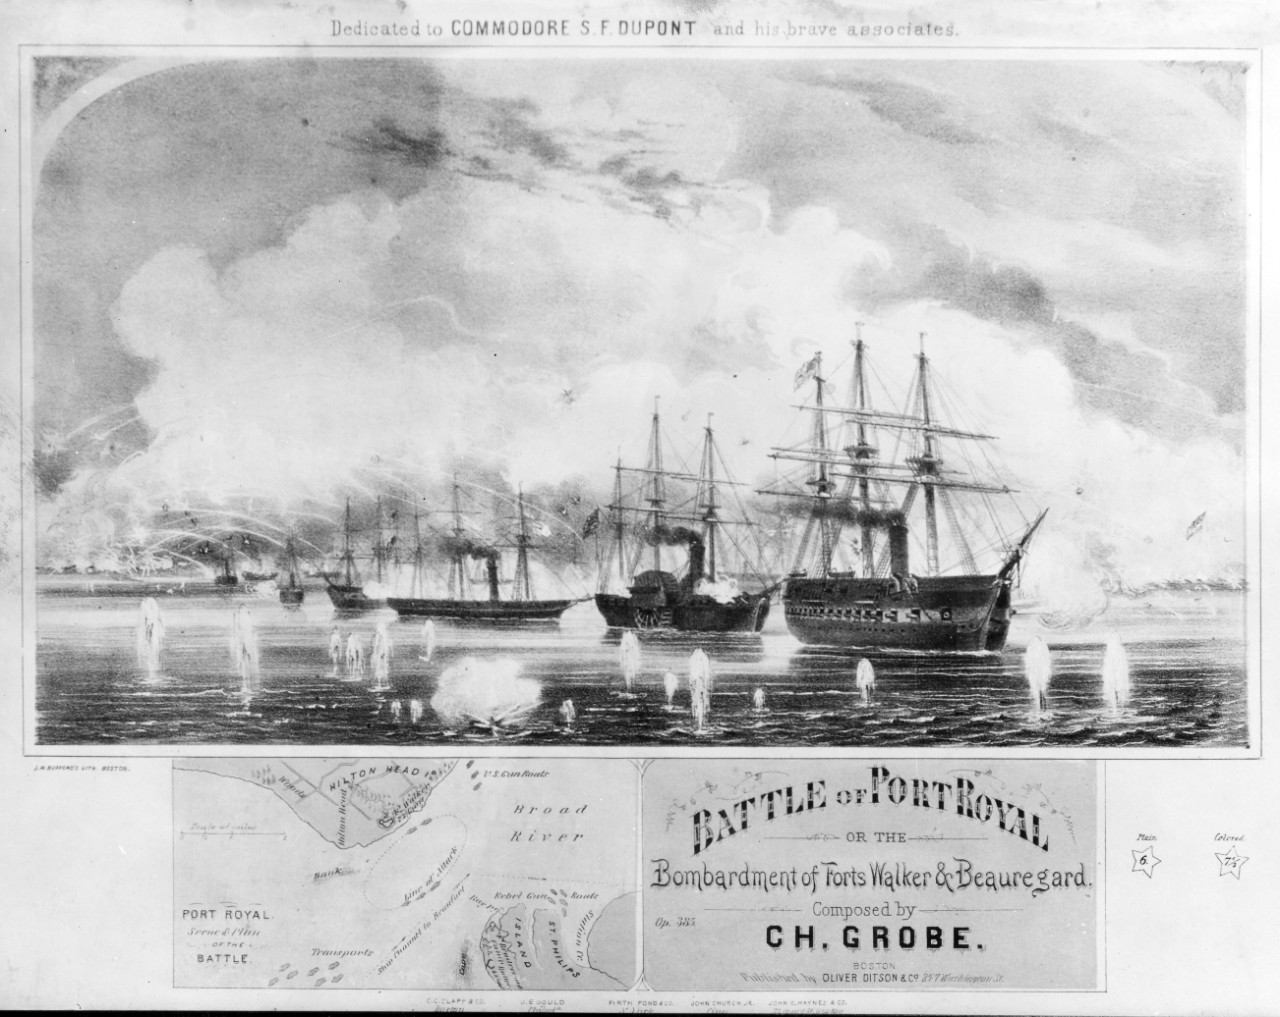 Song Sheet, "Battle of Port Royal"